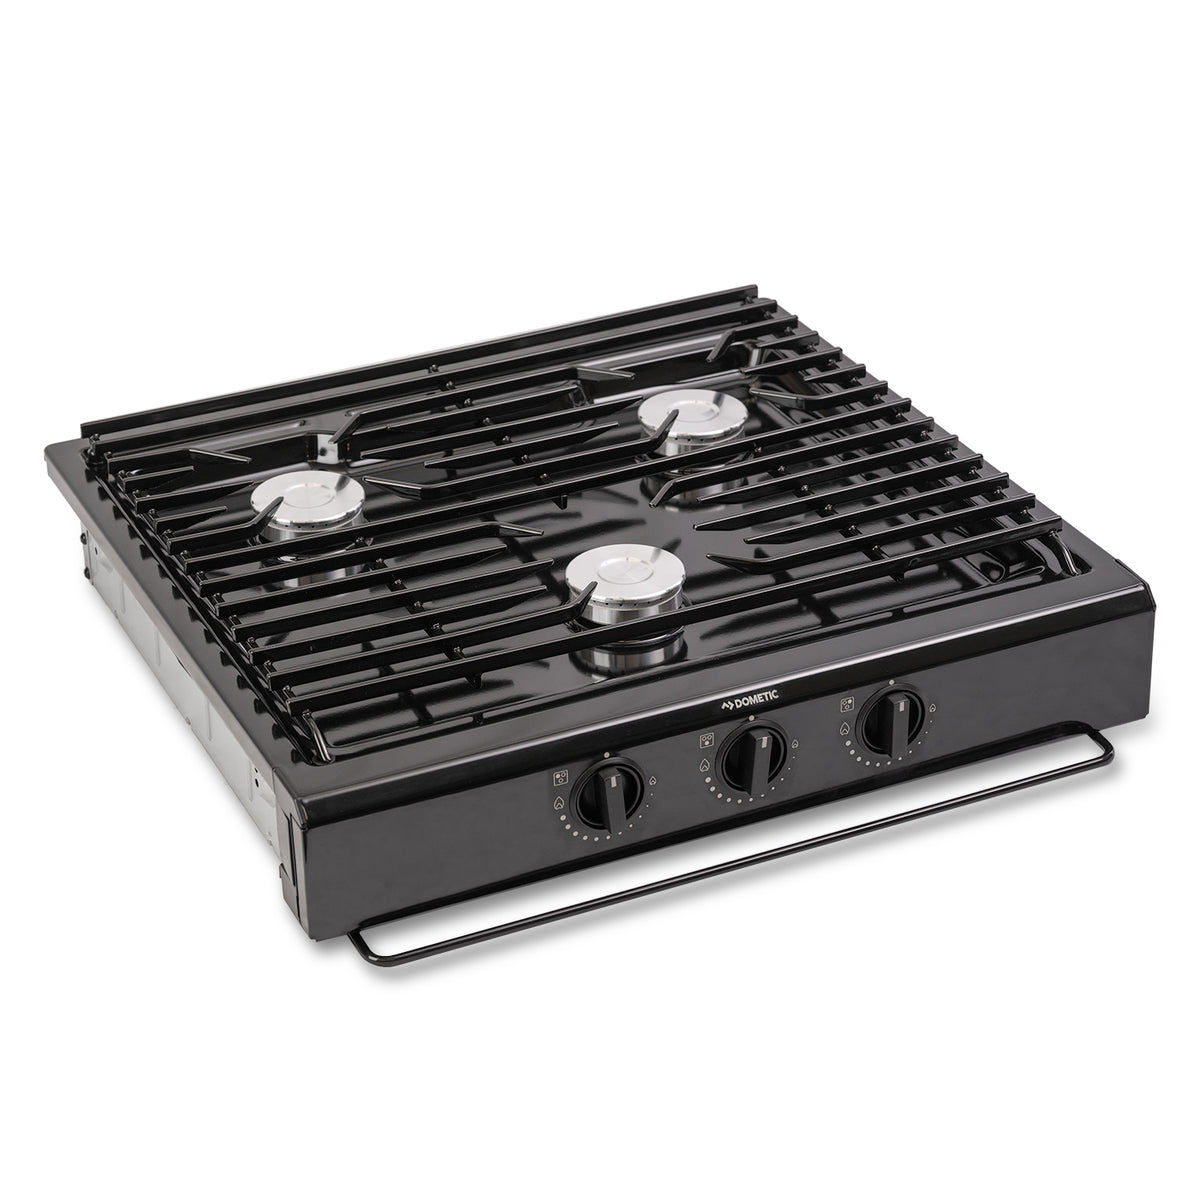 Dometic Atwood 50300 RV Kitchen 3-Burner Cooktop - Black - Match Light –